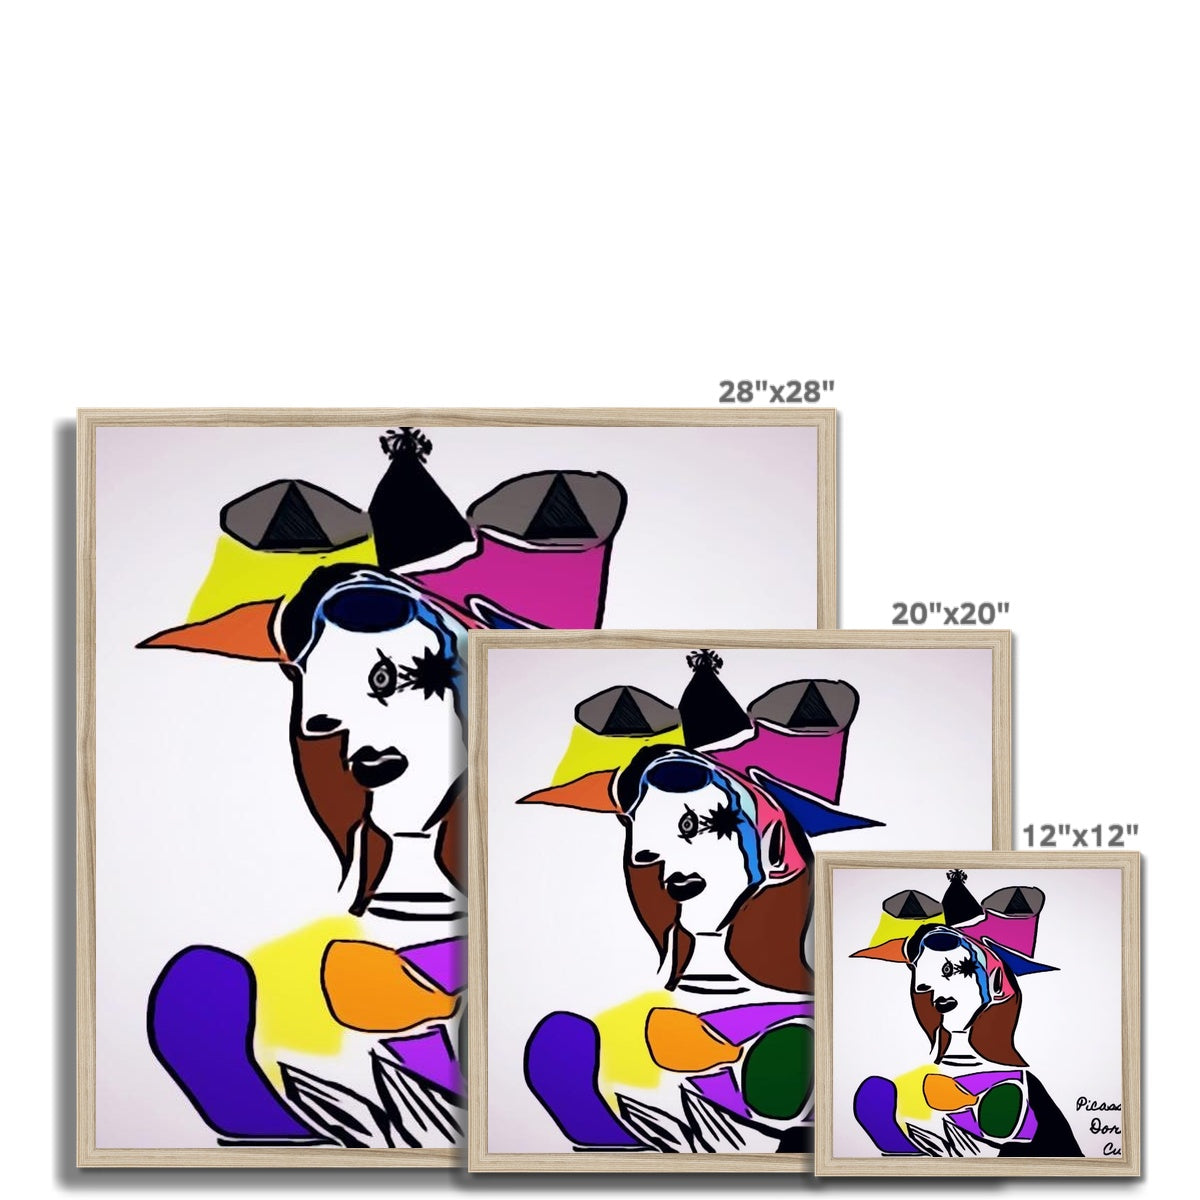 Dora Framed Print - Premium Fine art from Prodigi - Just $26! Shop now at Concordia Style Boutique